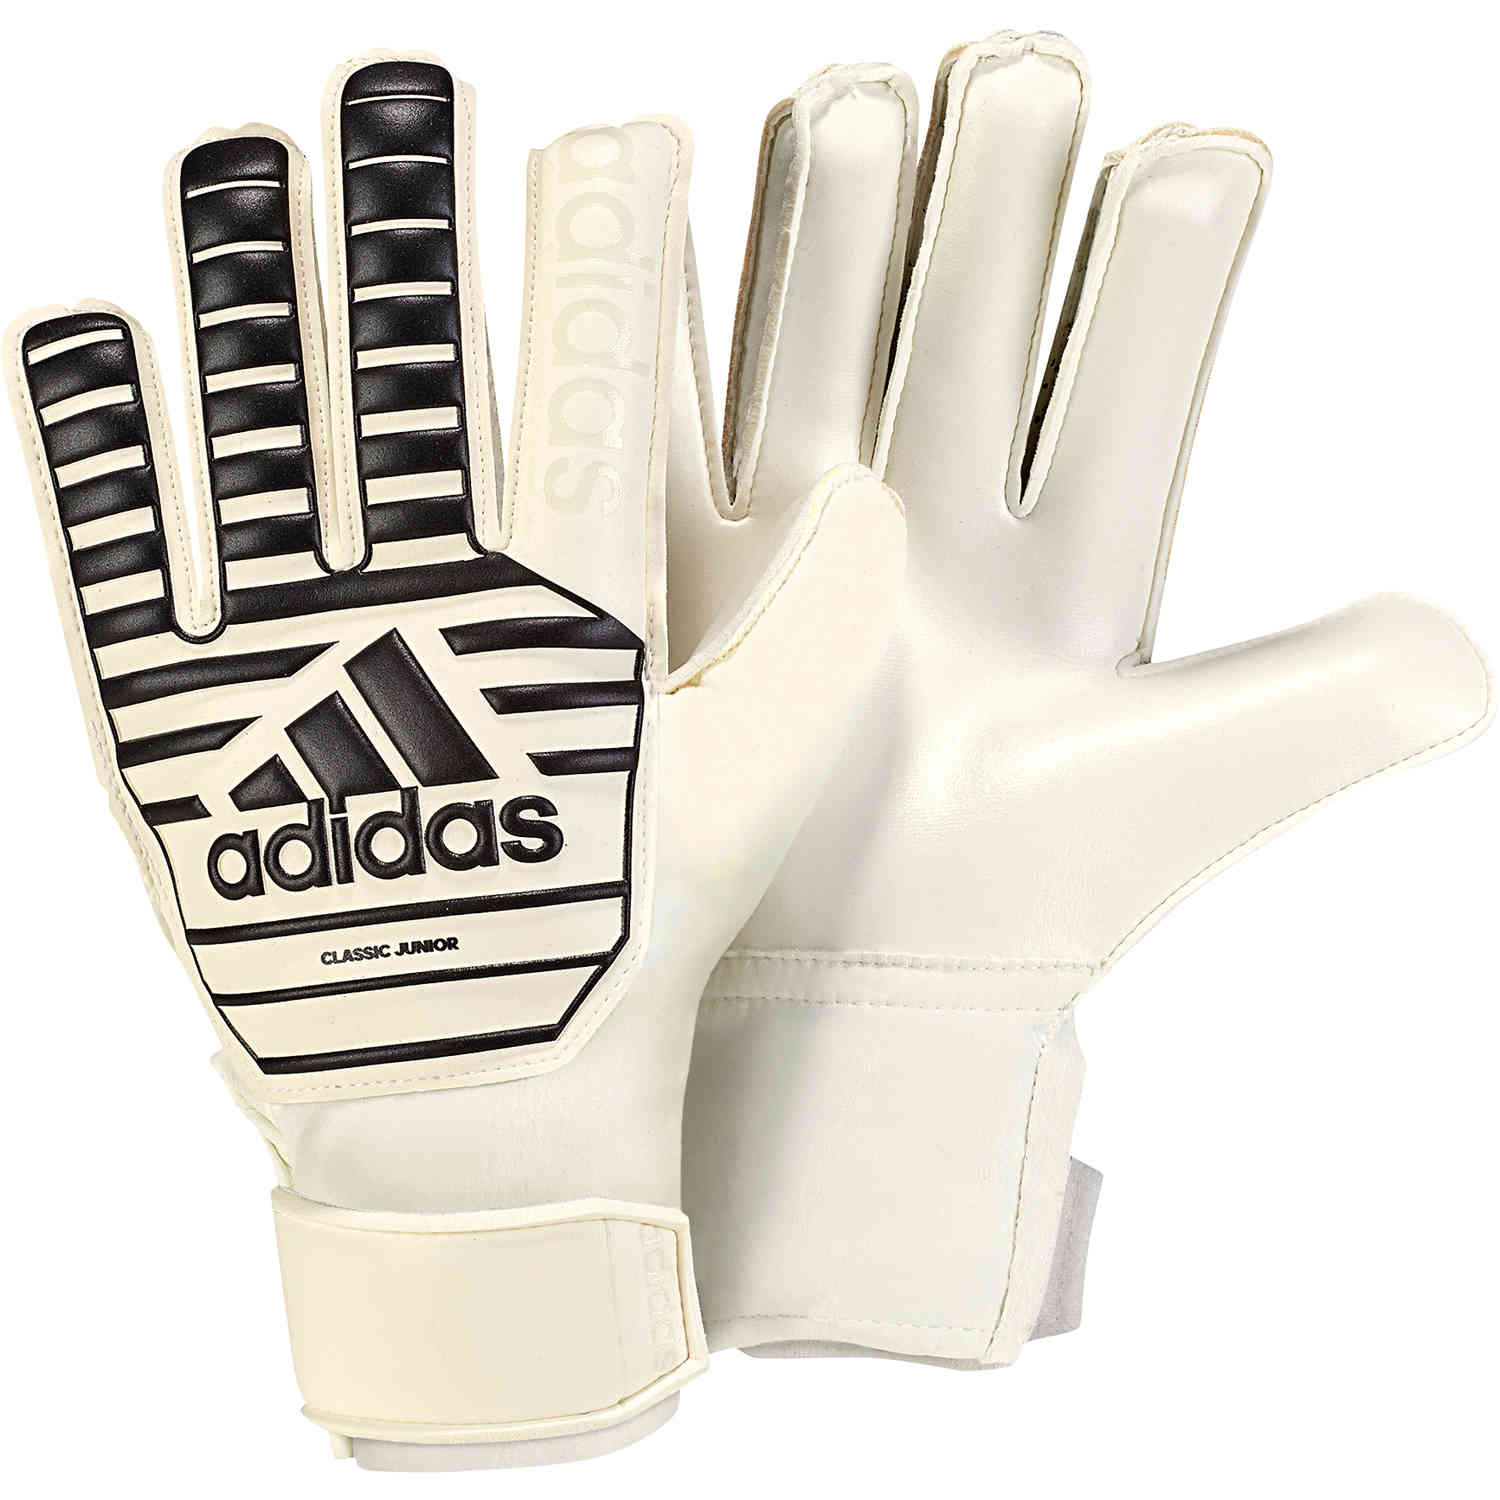 adidas Classic Goalkeeper Gloves 